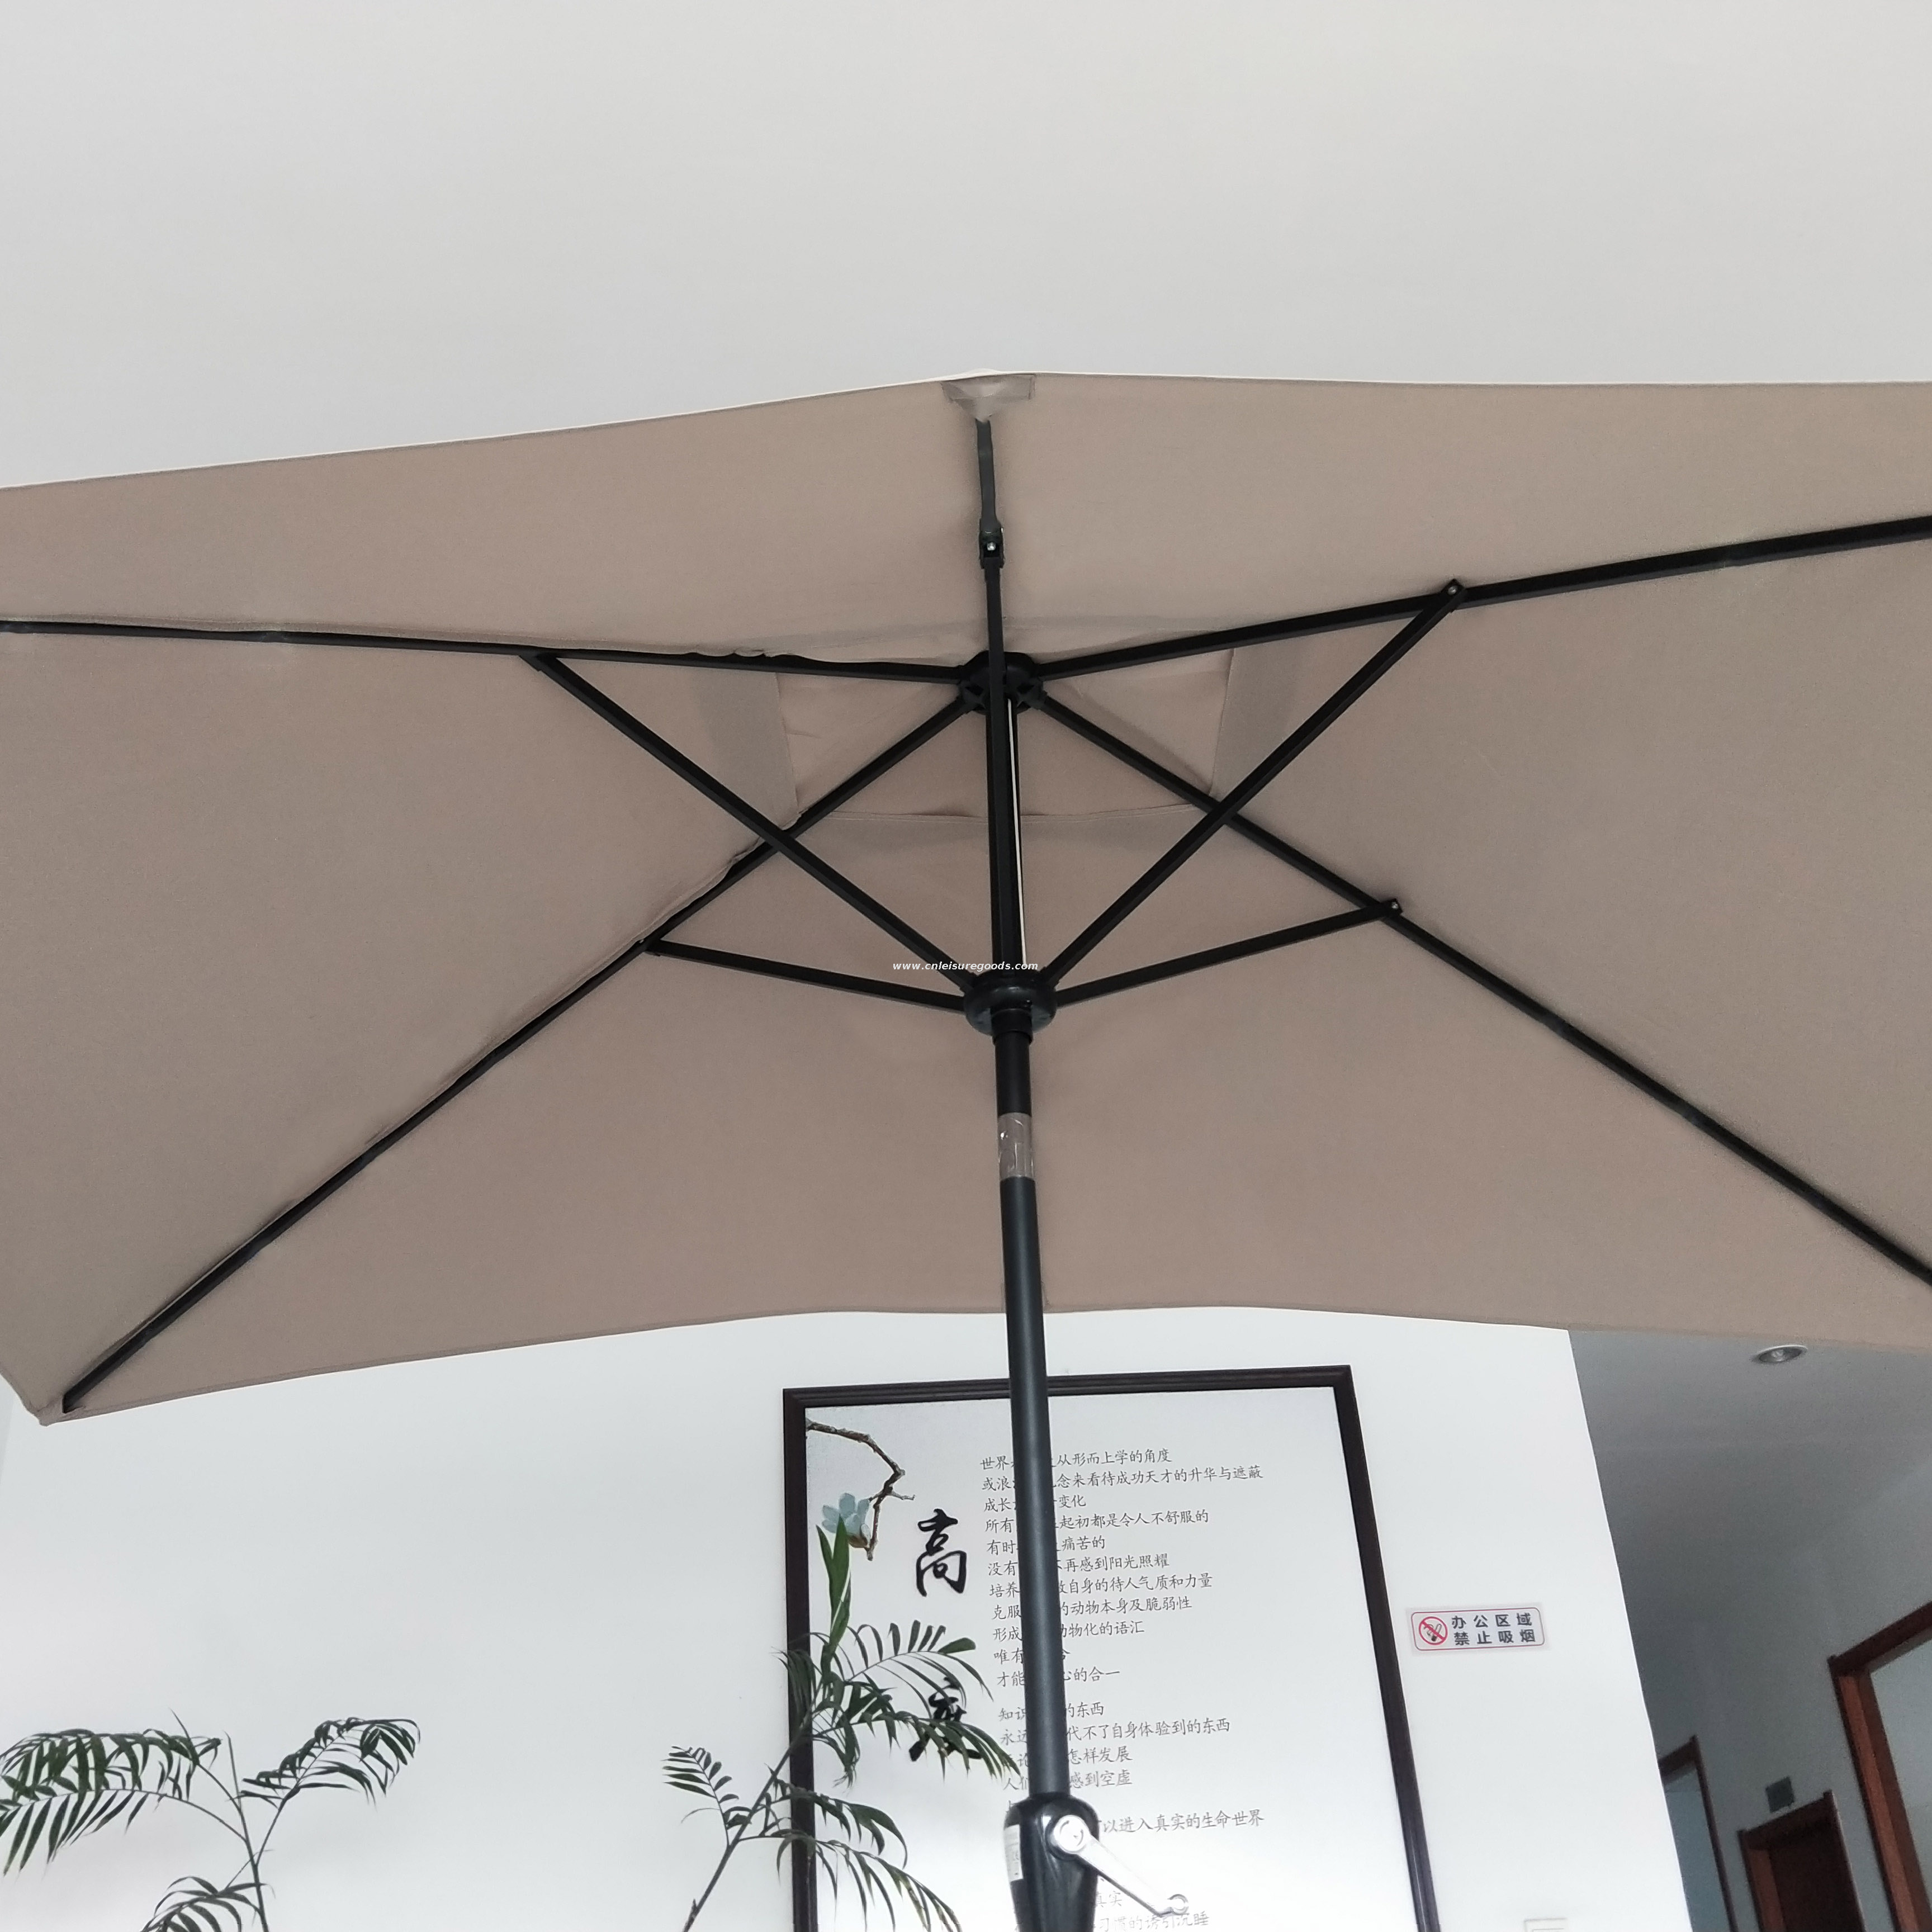 Factory Hot Sale 2x3 M Commercial Offset Large Patio Outdoor Canopy Rectangular Garden Umbrella